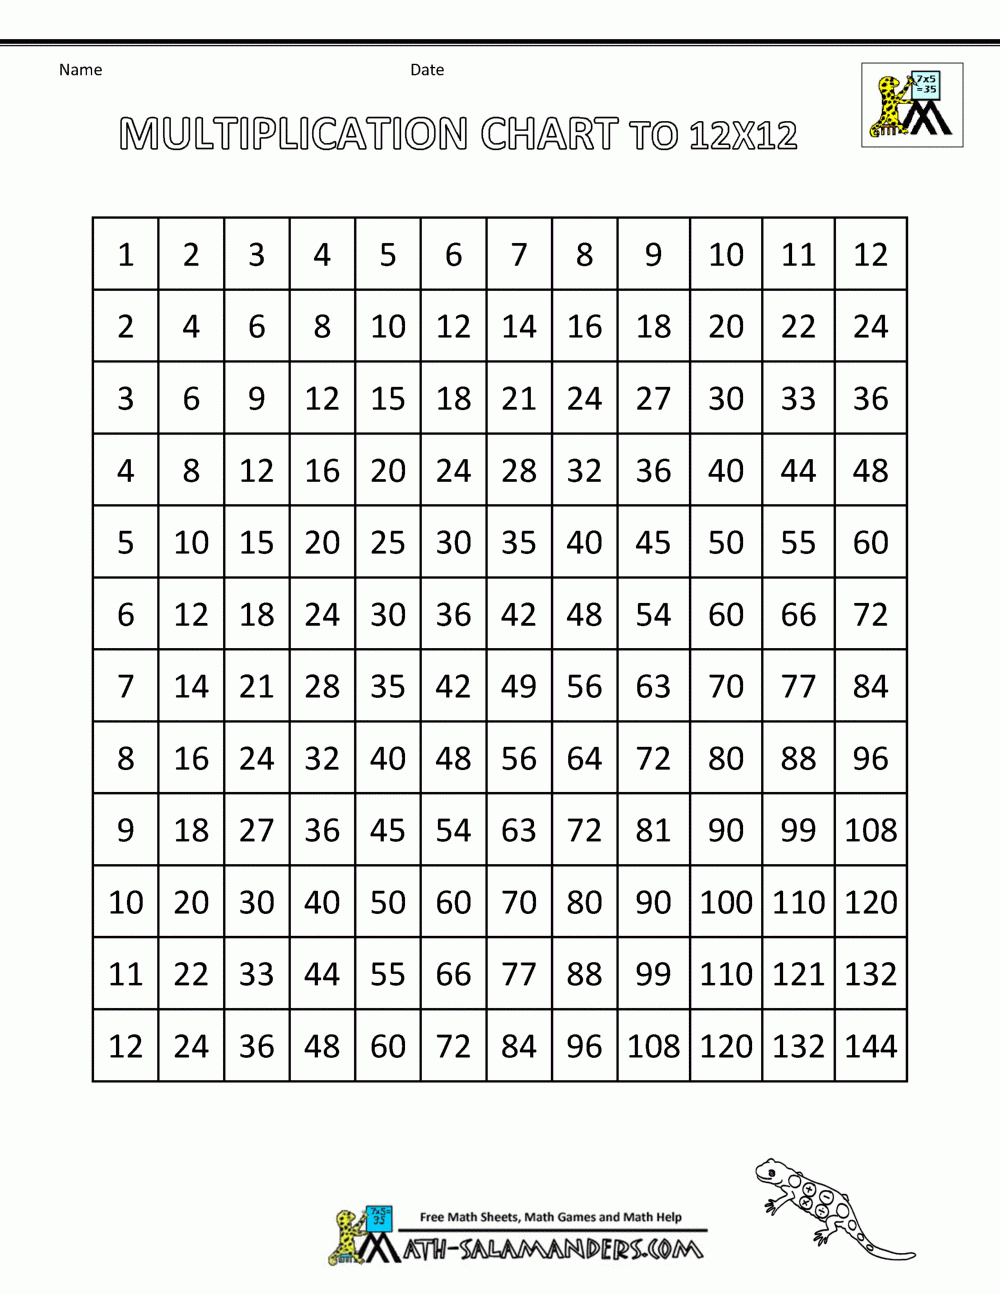 10-viral-mini-multiplication-chart-printable